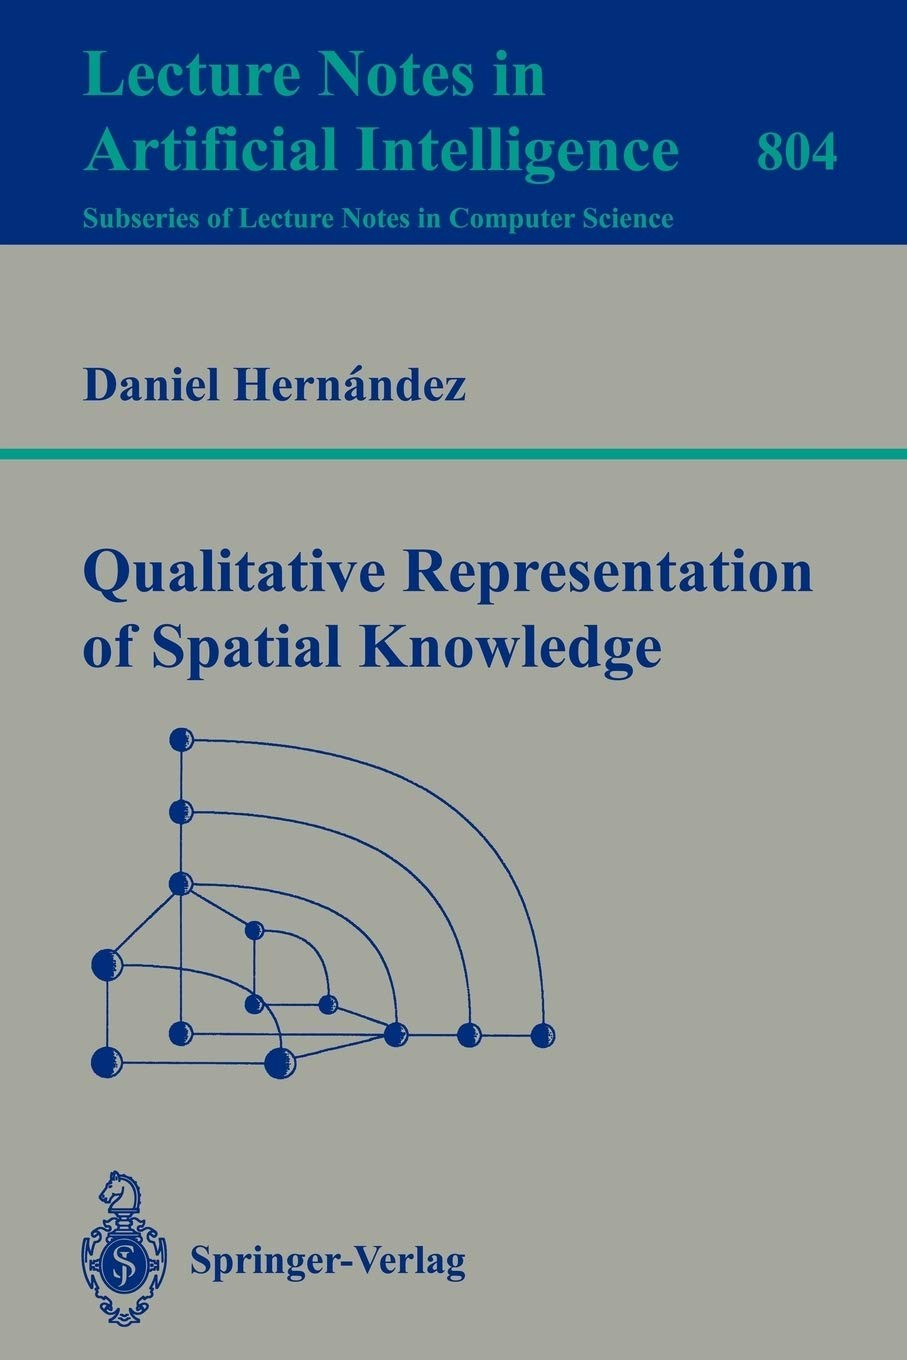 Qualitative representation of spatial knowledge